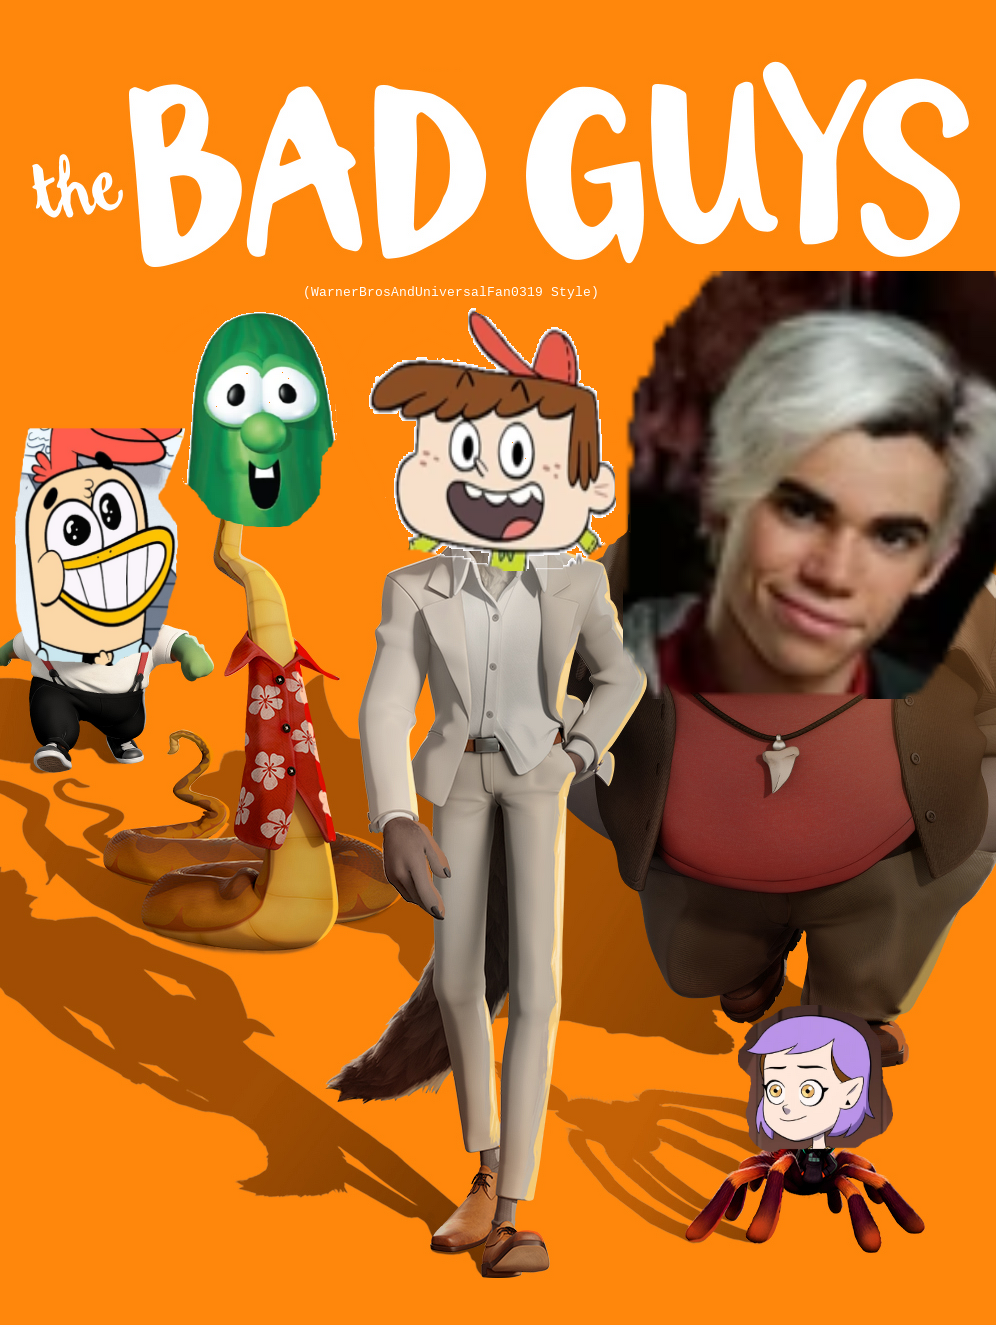 The Bad Guy's Blog